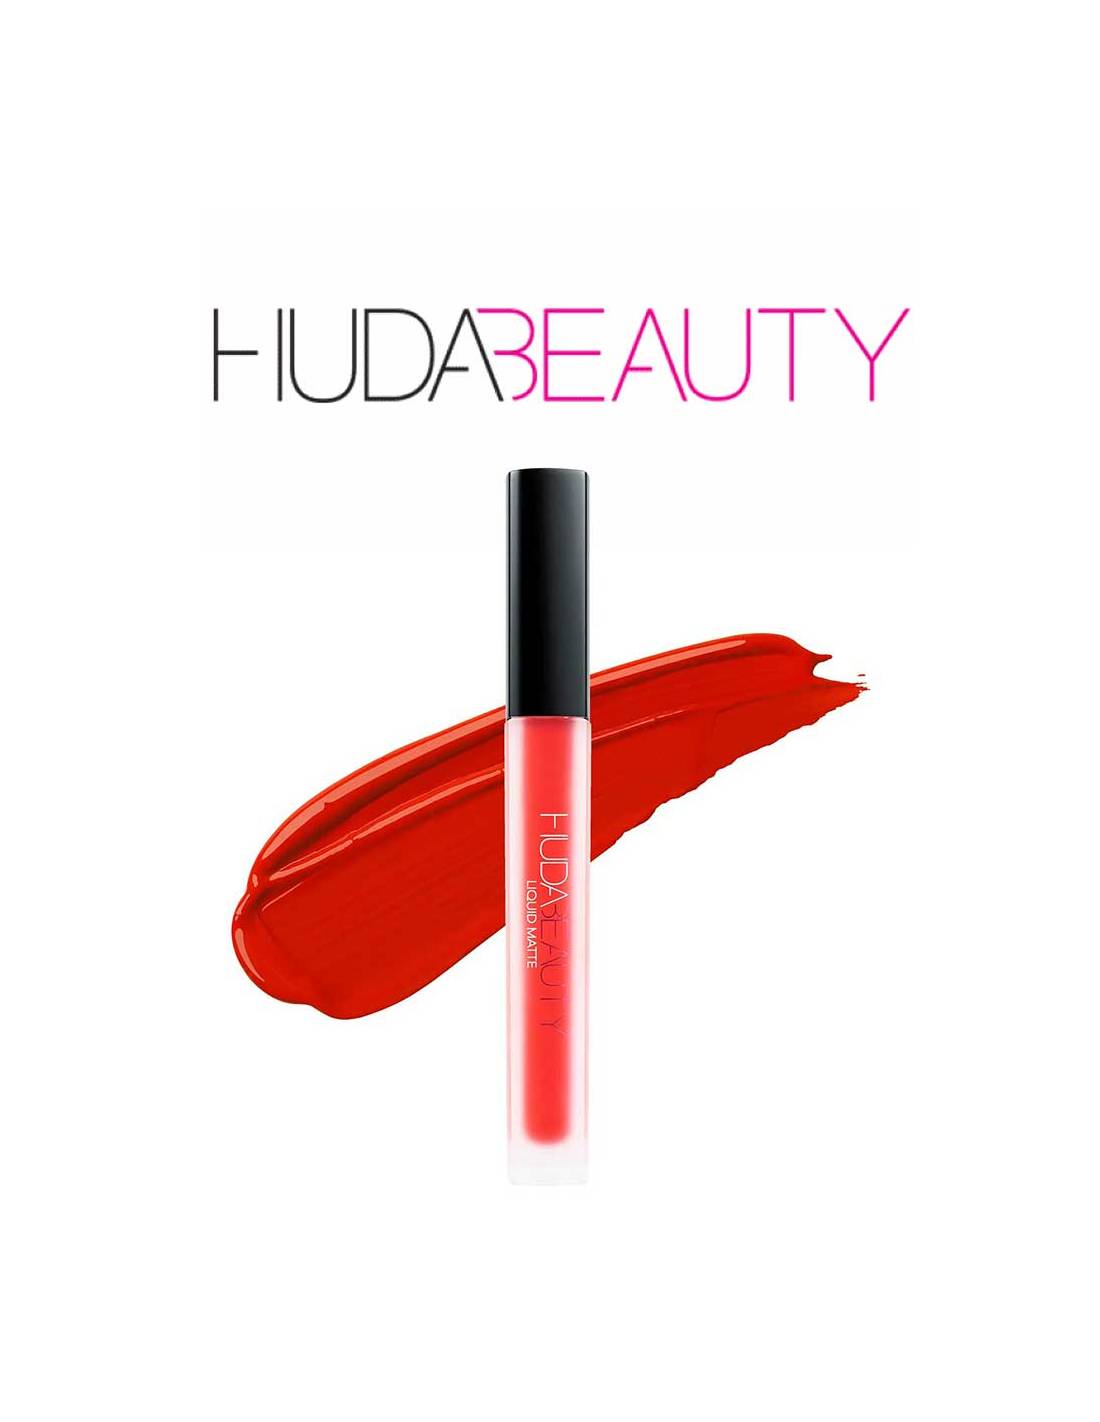 Huda Beauty Liquid Matte Lipstick Alluring - AllurebeautypkHuda Beauty Liquid Matte Lipstick Alluring